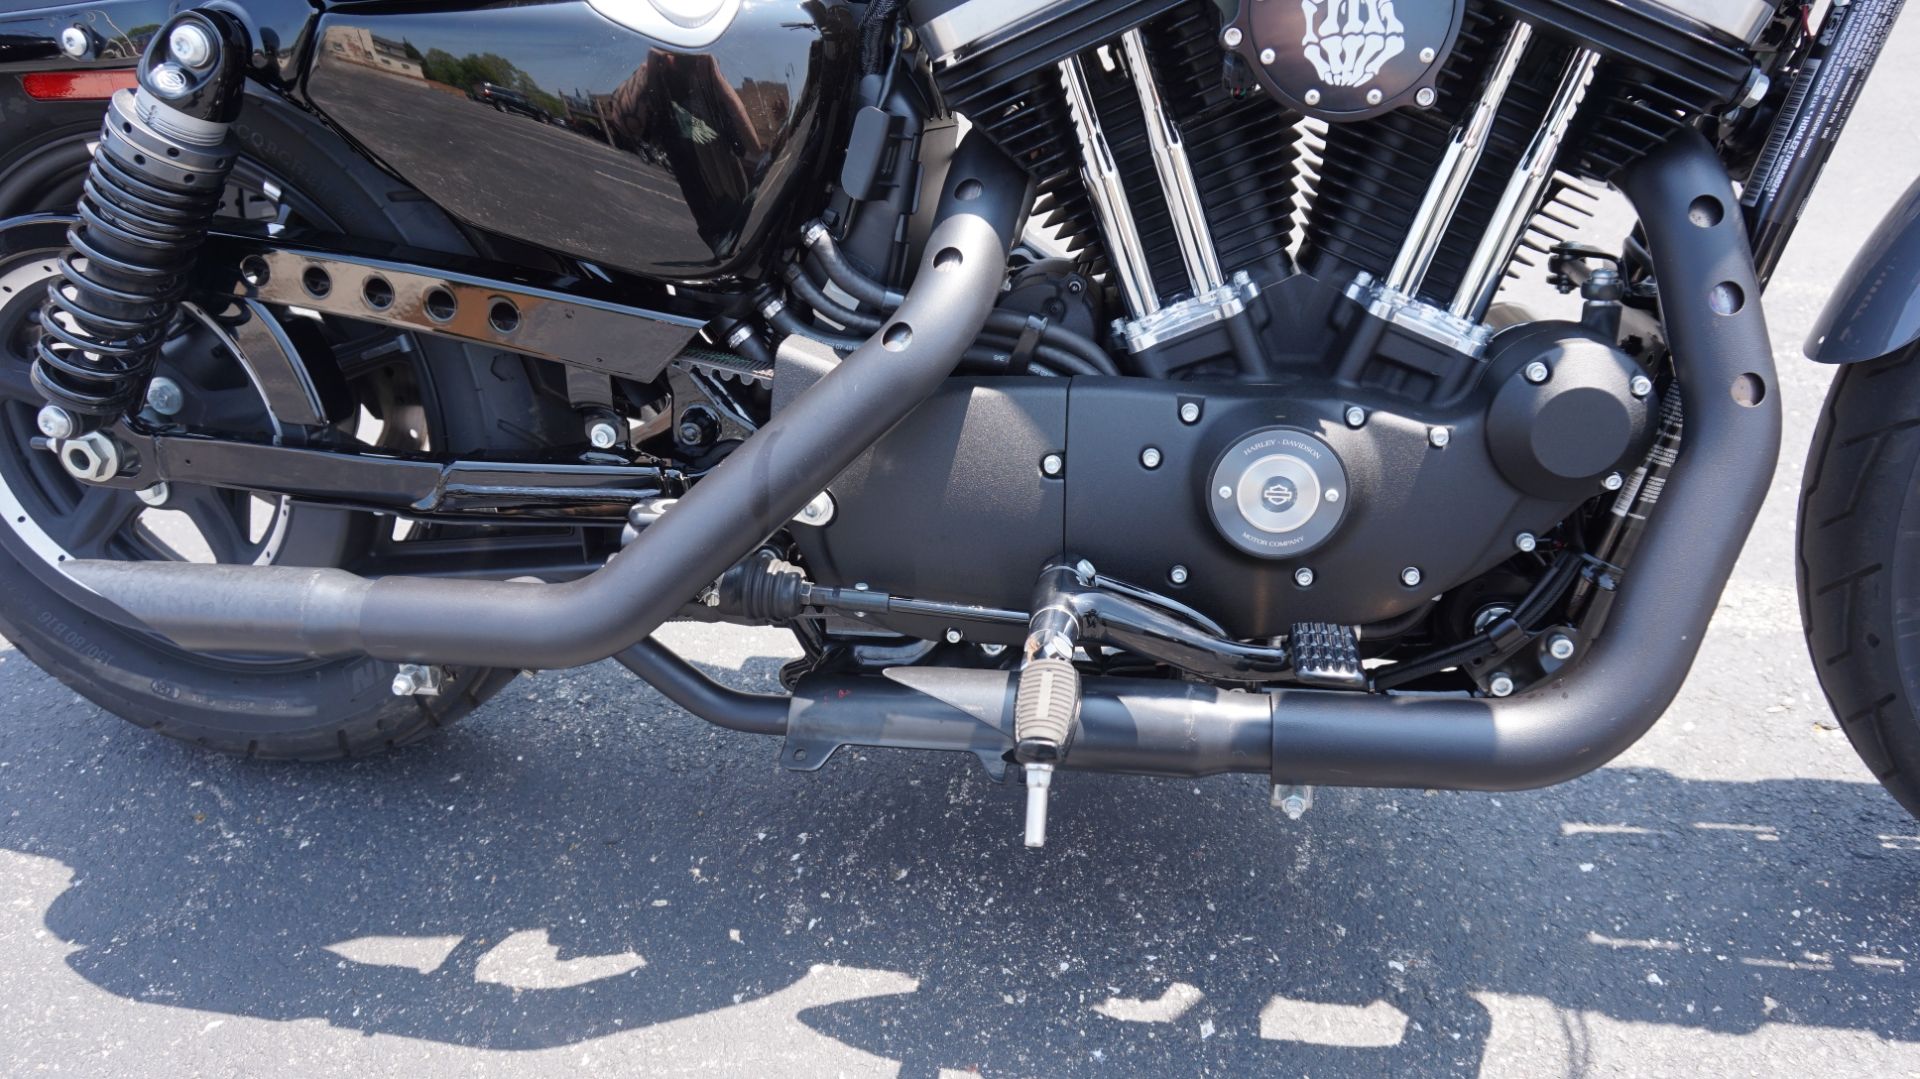 2022 Harley-Davidson Iron 883™ in Racine, Wisconsin - Photo 19